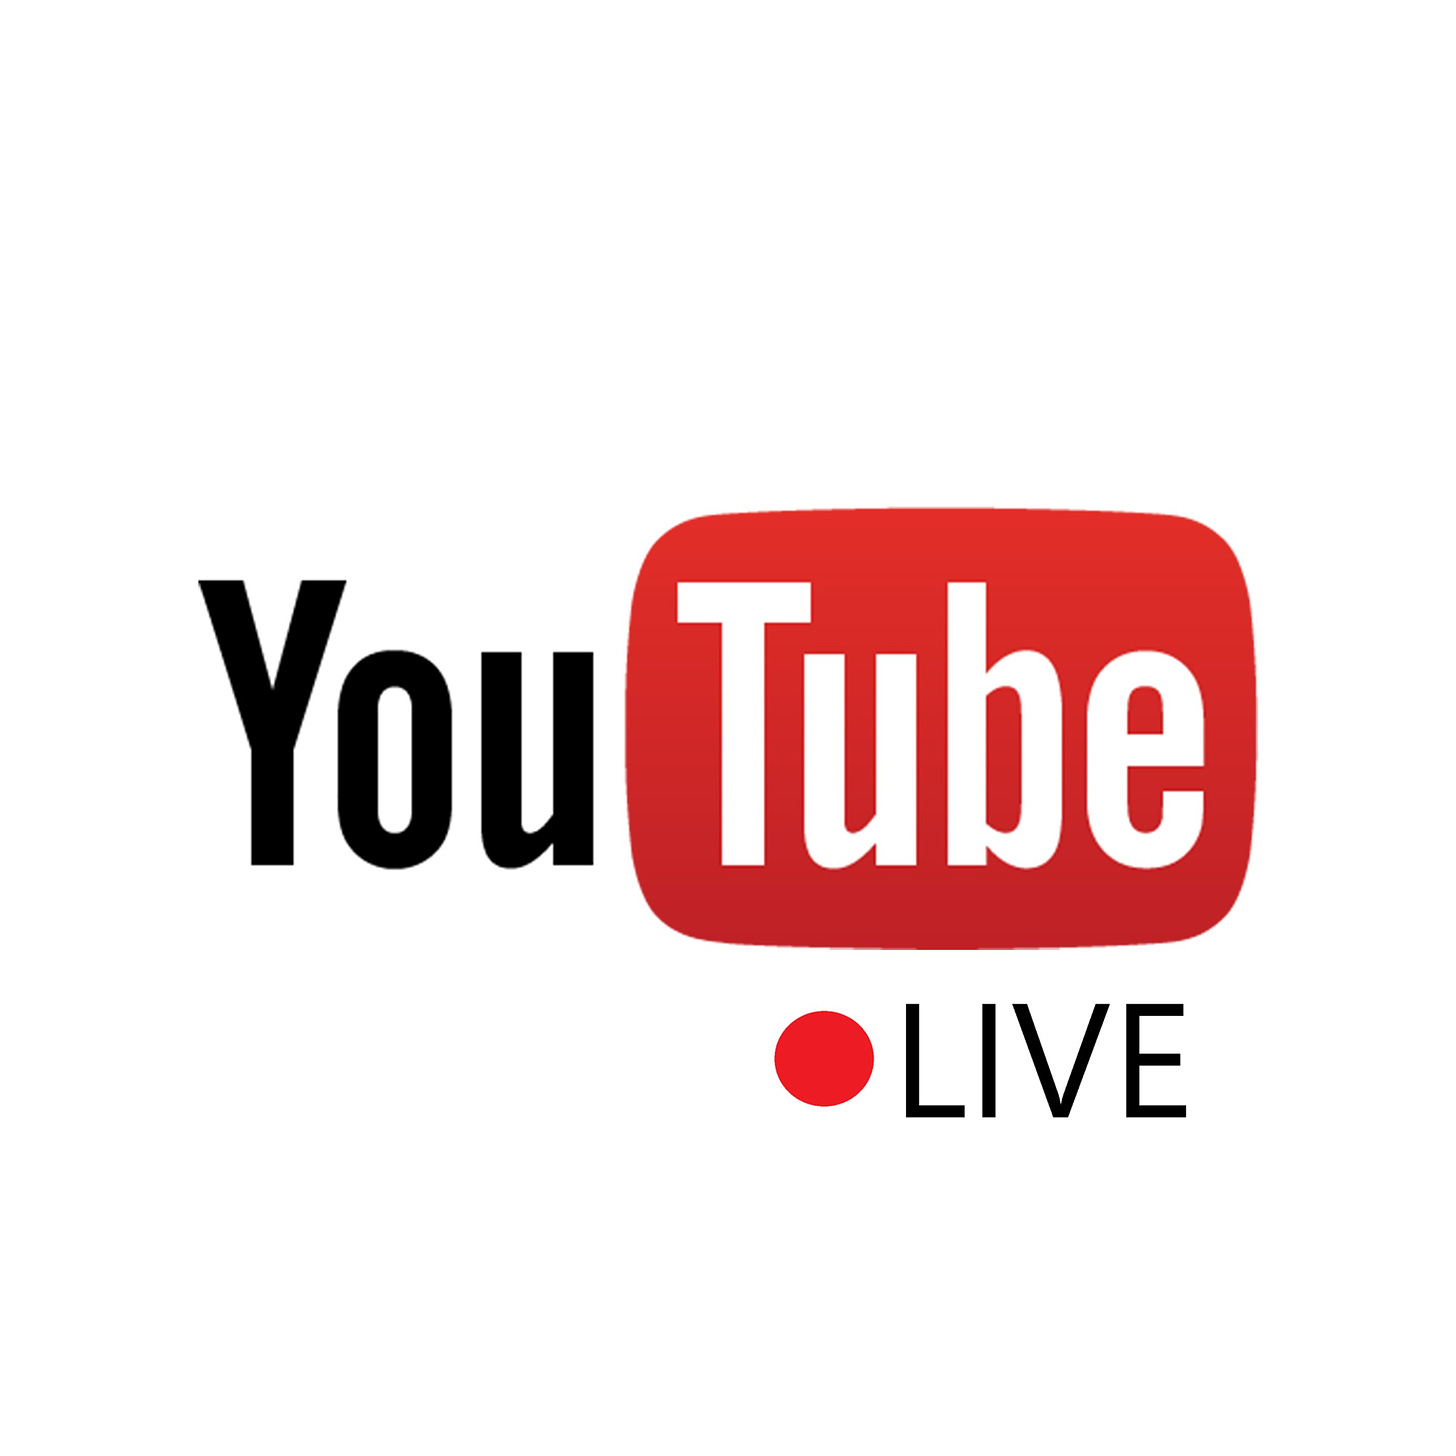 Use YouTube Live with HeySummit